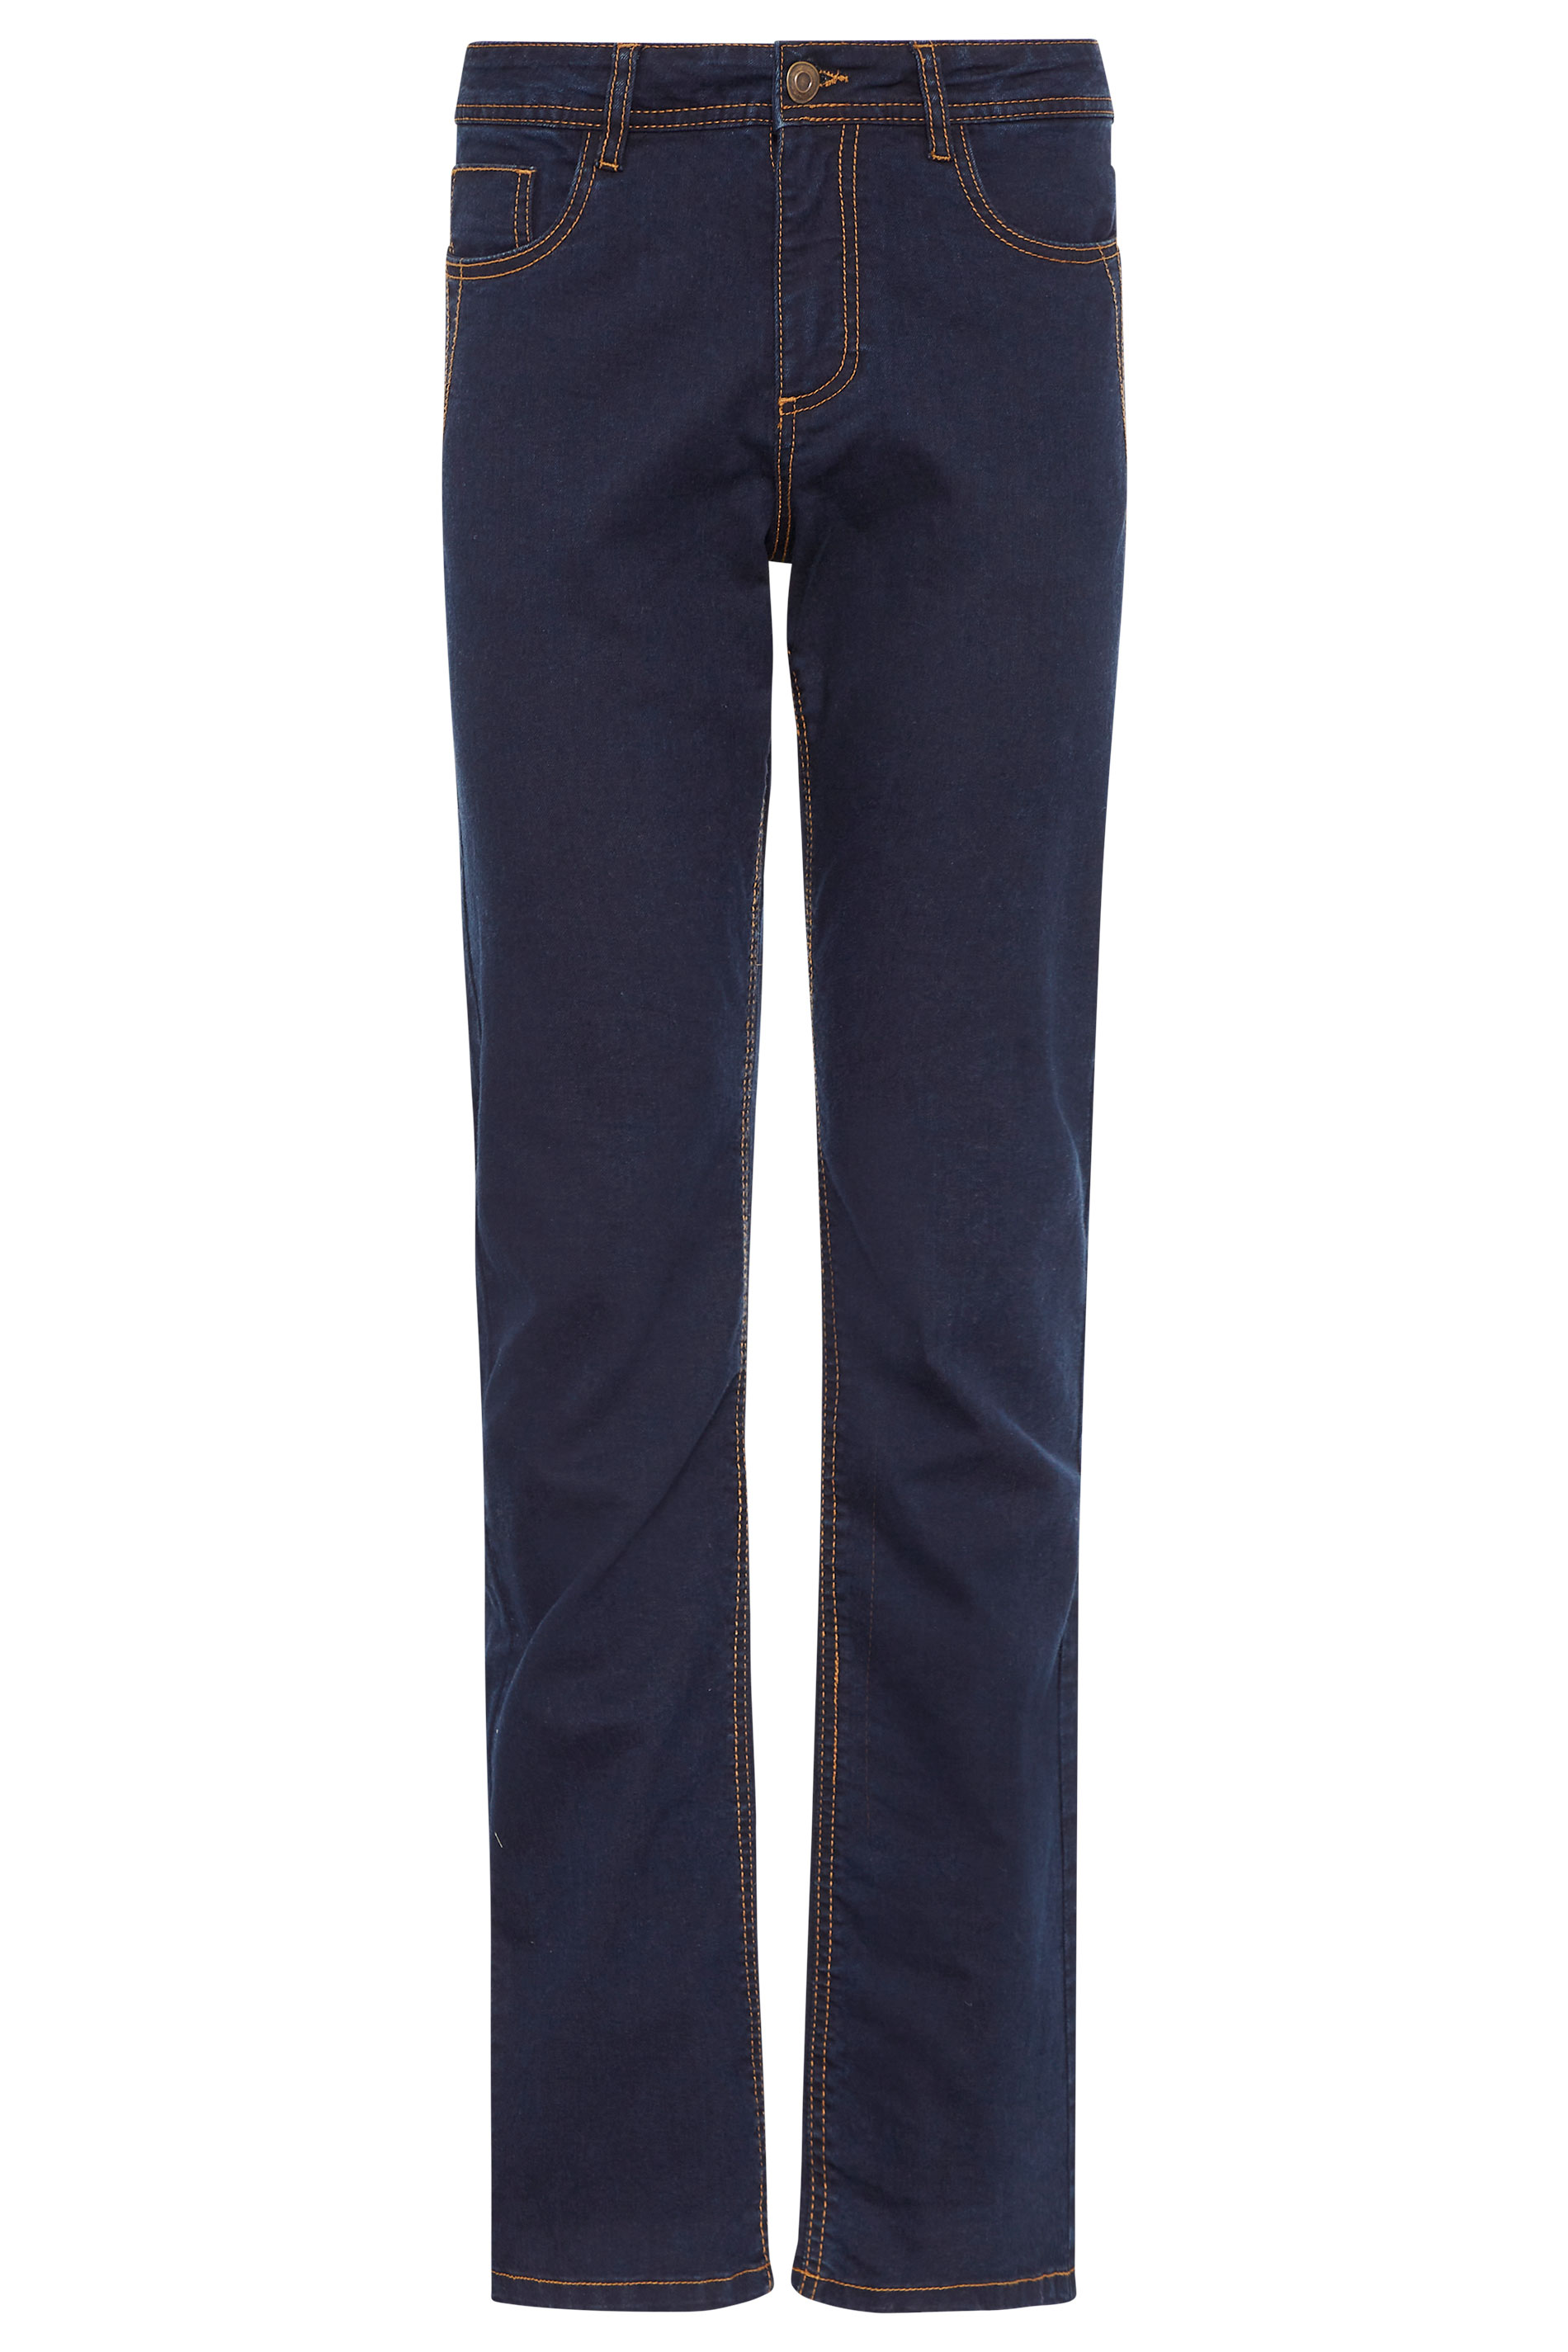 LTS Indigo Blue IVY Straight Leg Jeans | Long Tall Sally 3